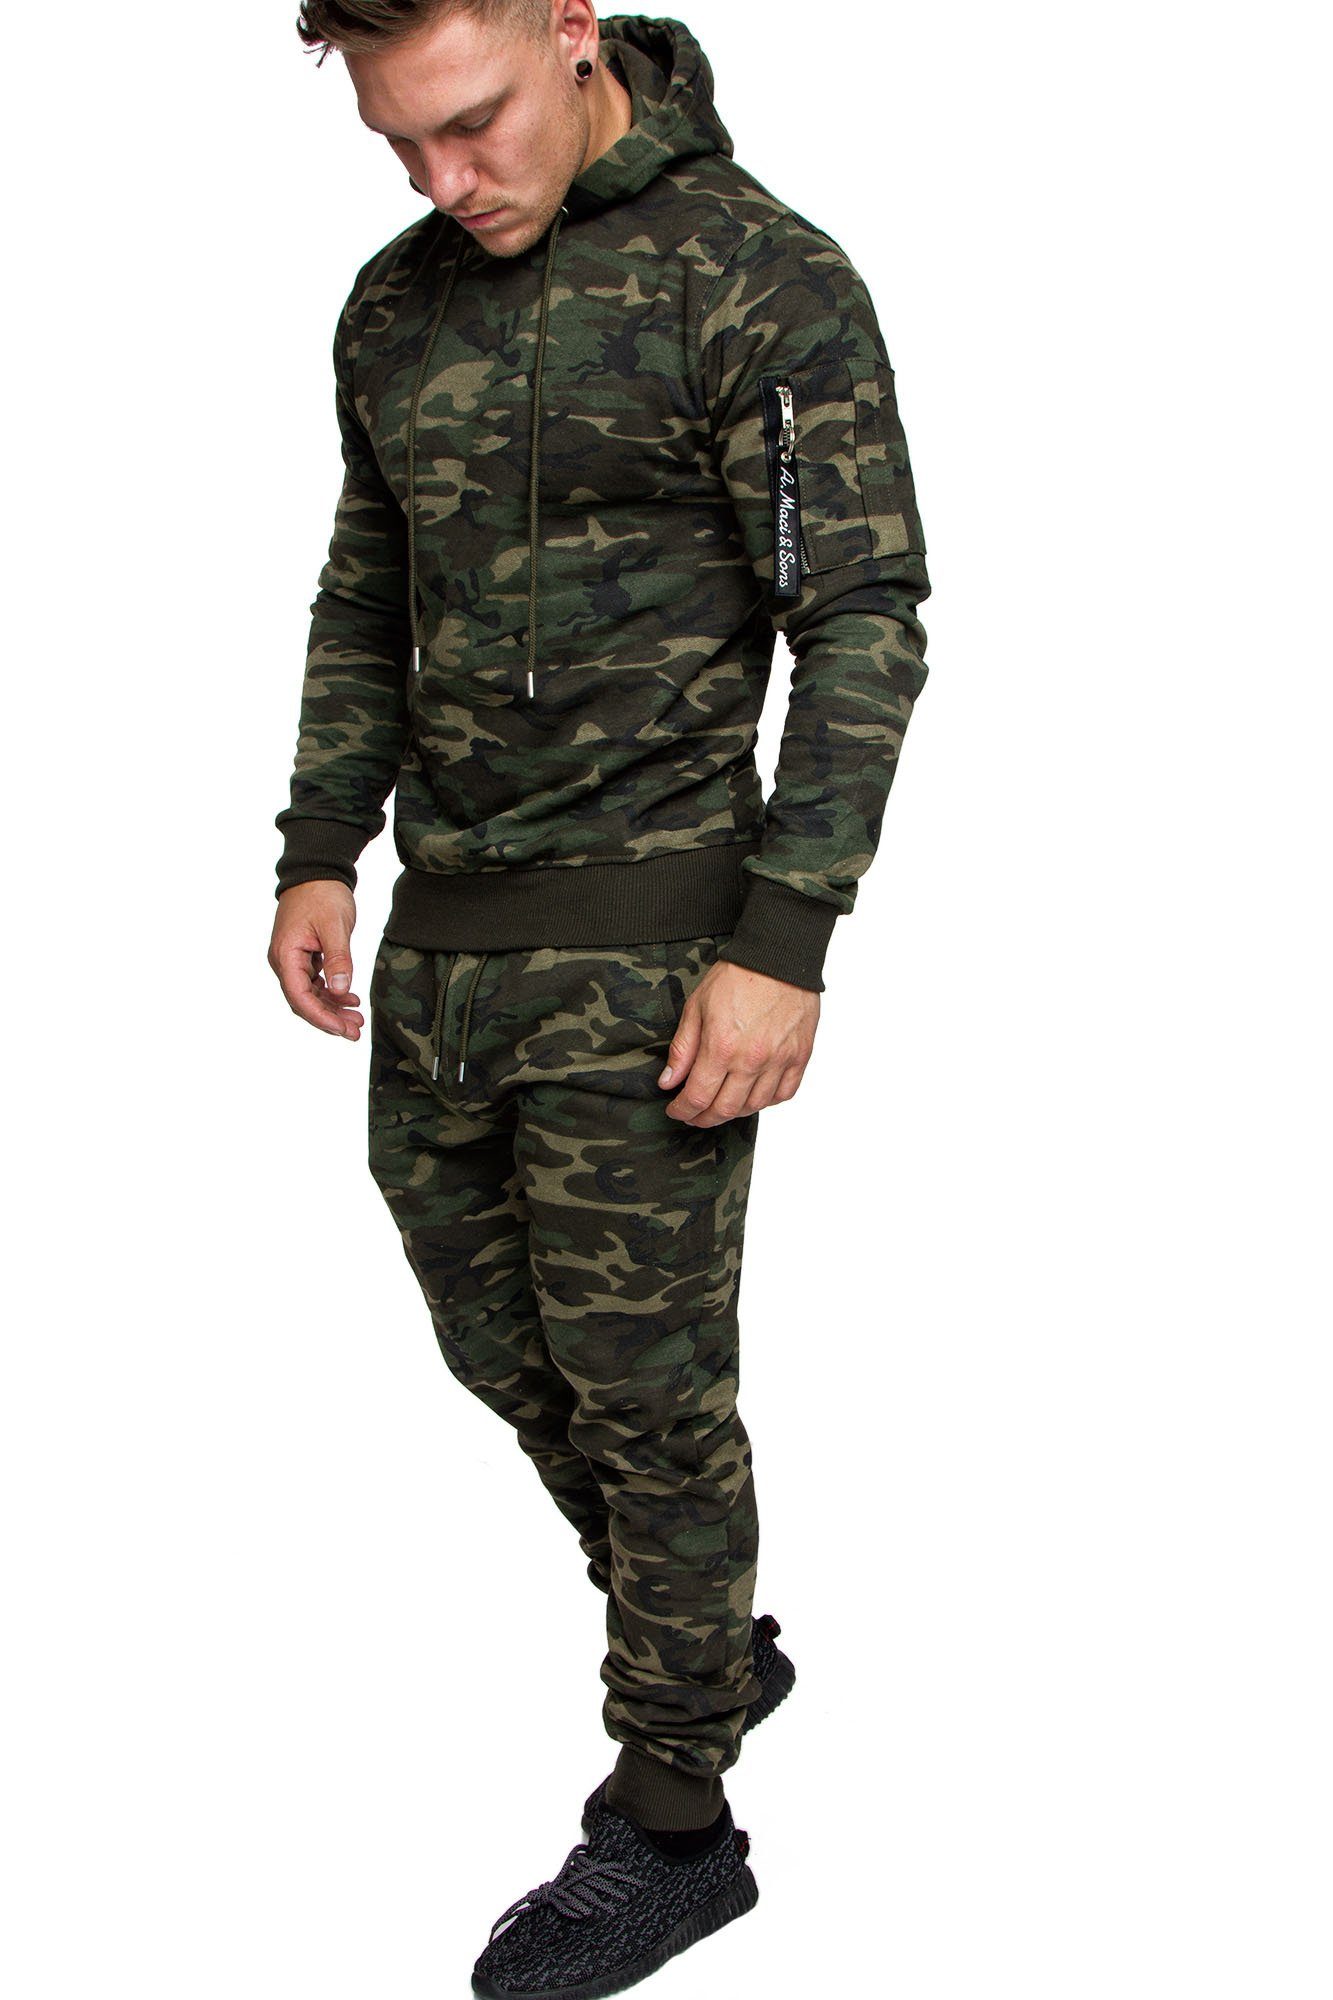 Amaci&Sons Trainingsanzug TOLEDO, Herren Cargo Stil Sportanzug Jogginganzug Sporthose Hoodie Camouflage Khaki